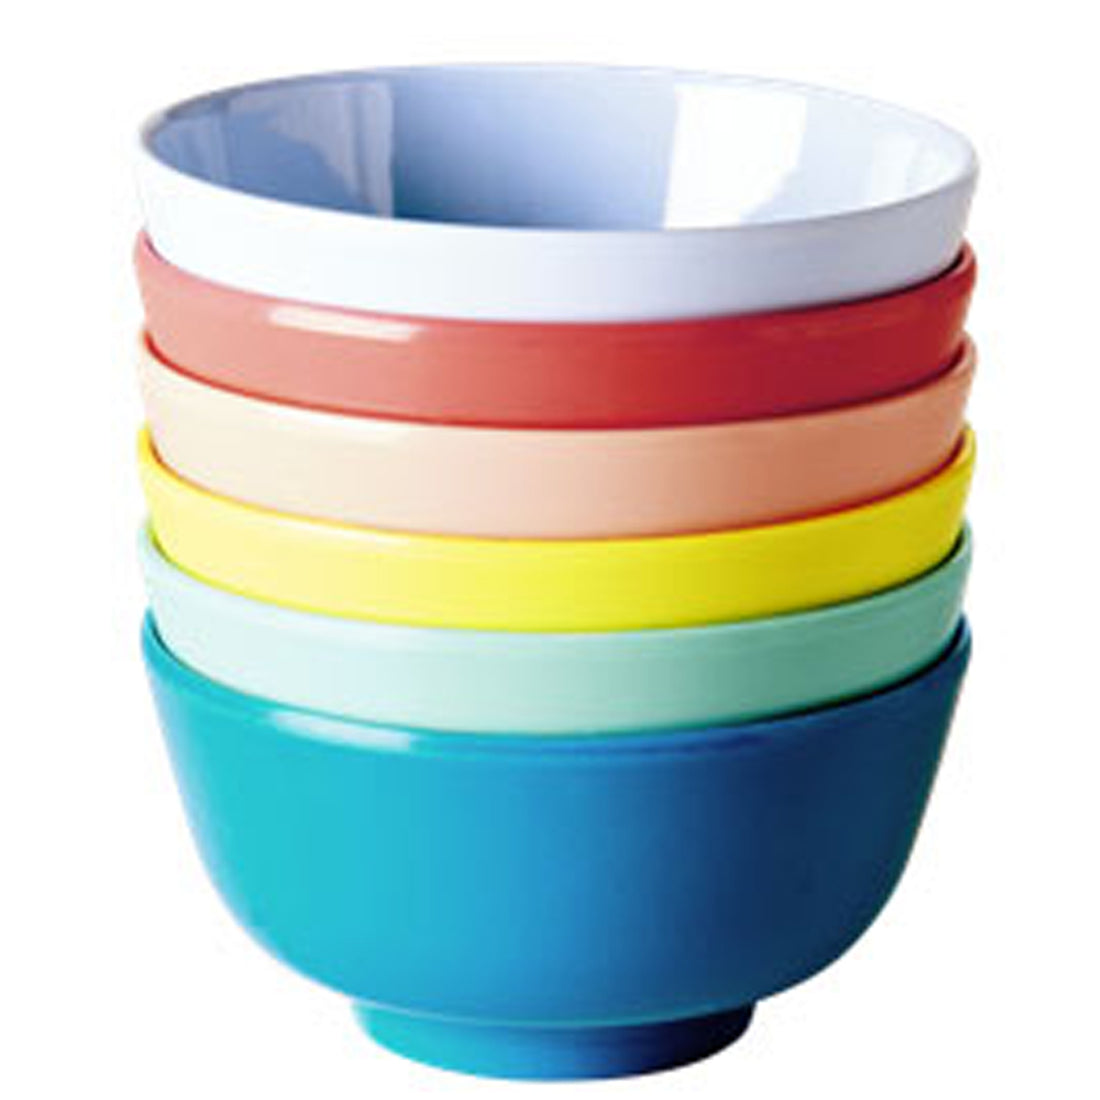 rice-dk-6-melamine-dipping-bowls-shine-colors- (1)